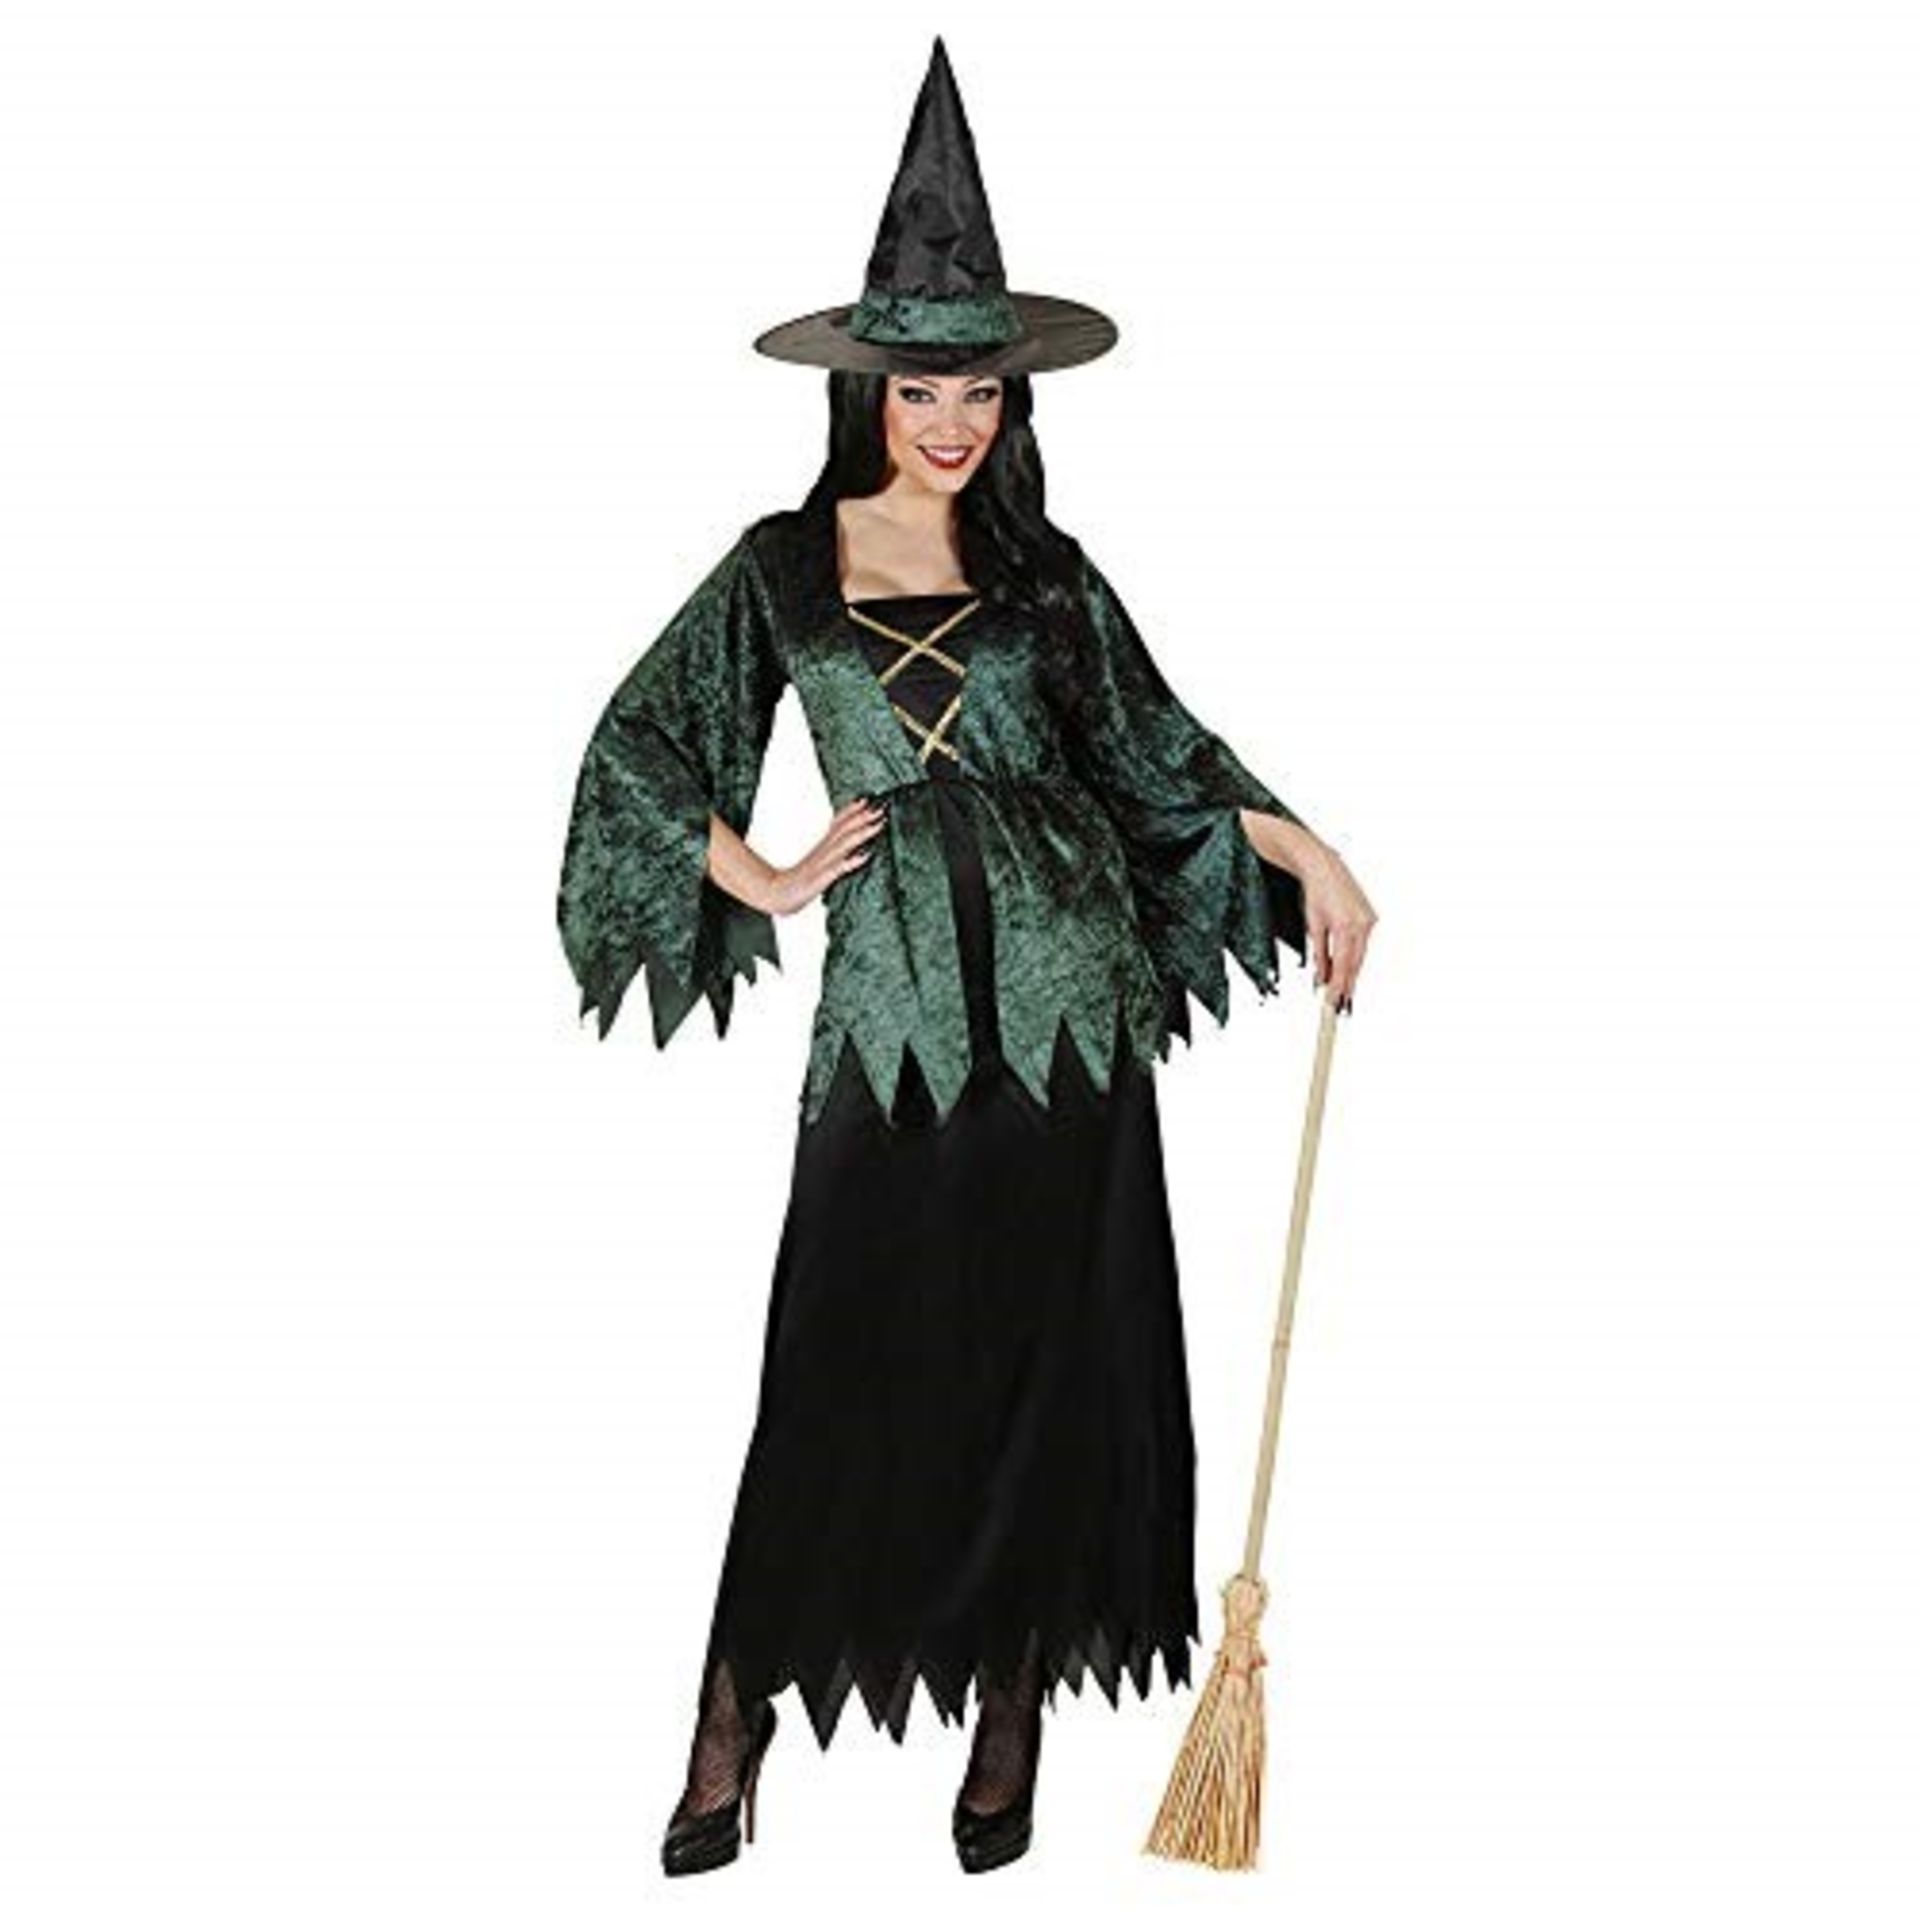 Ladies Witch Costume Medium UK 10-12 for Halloween Fancy Dress